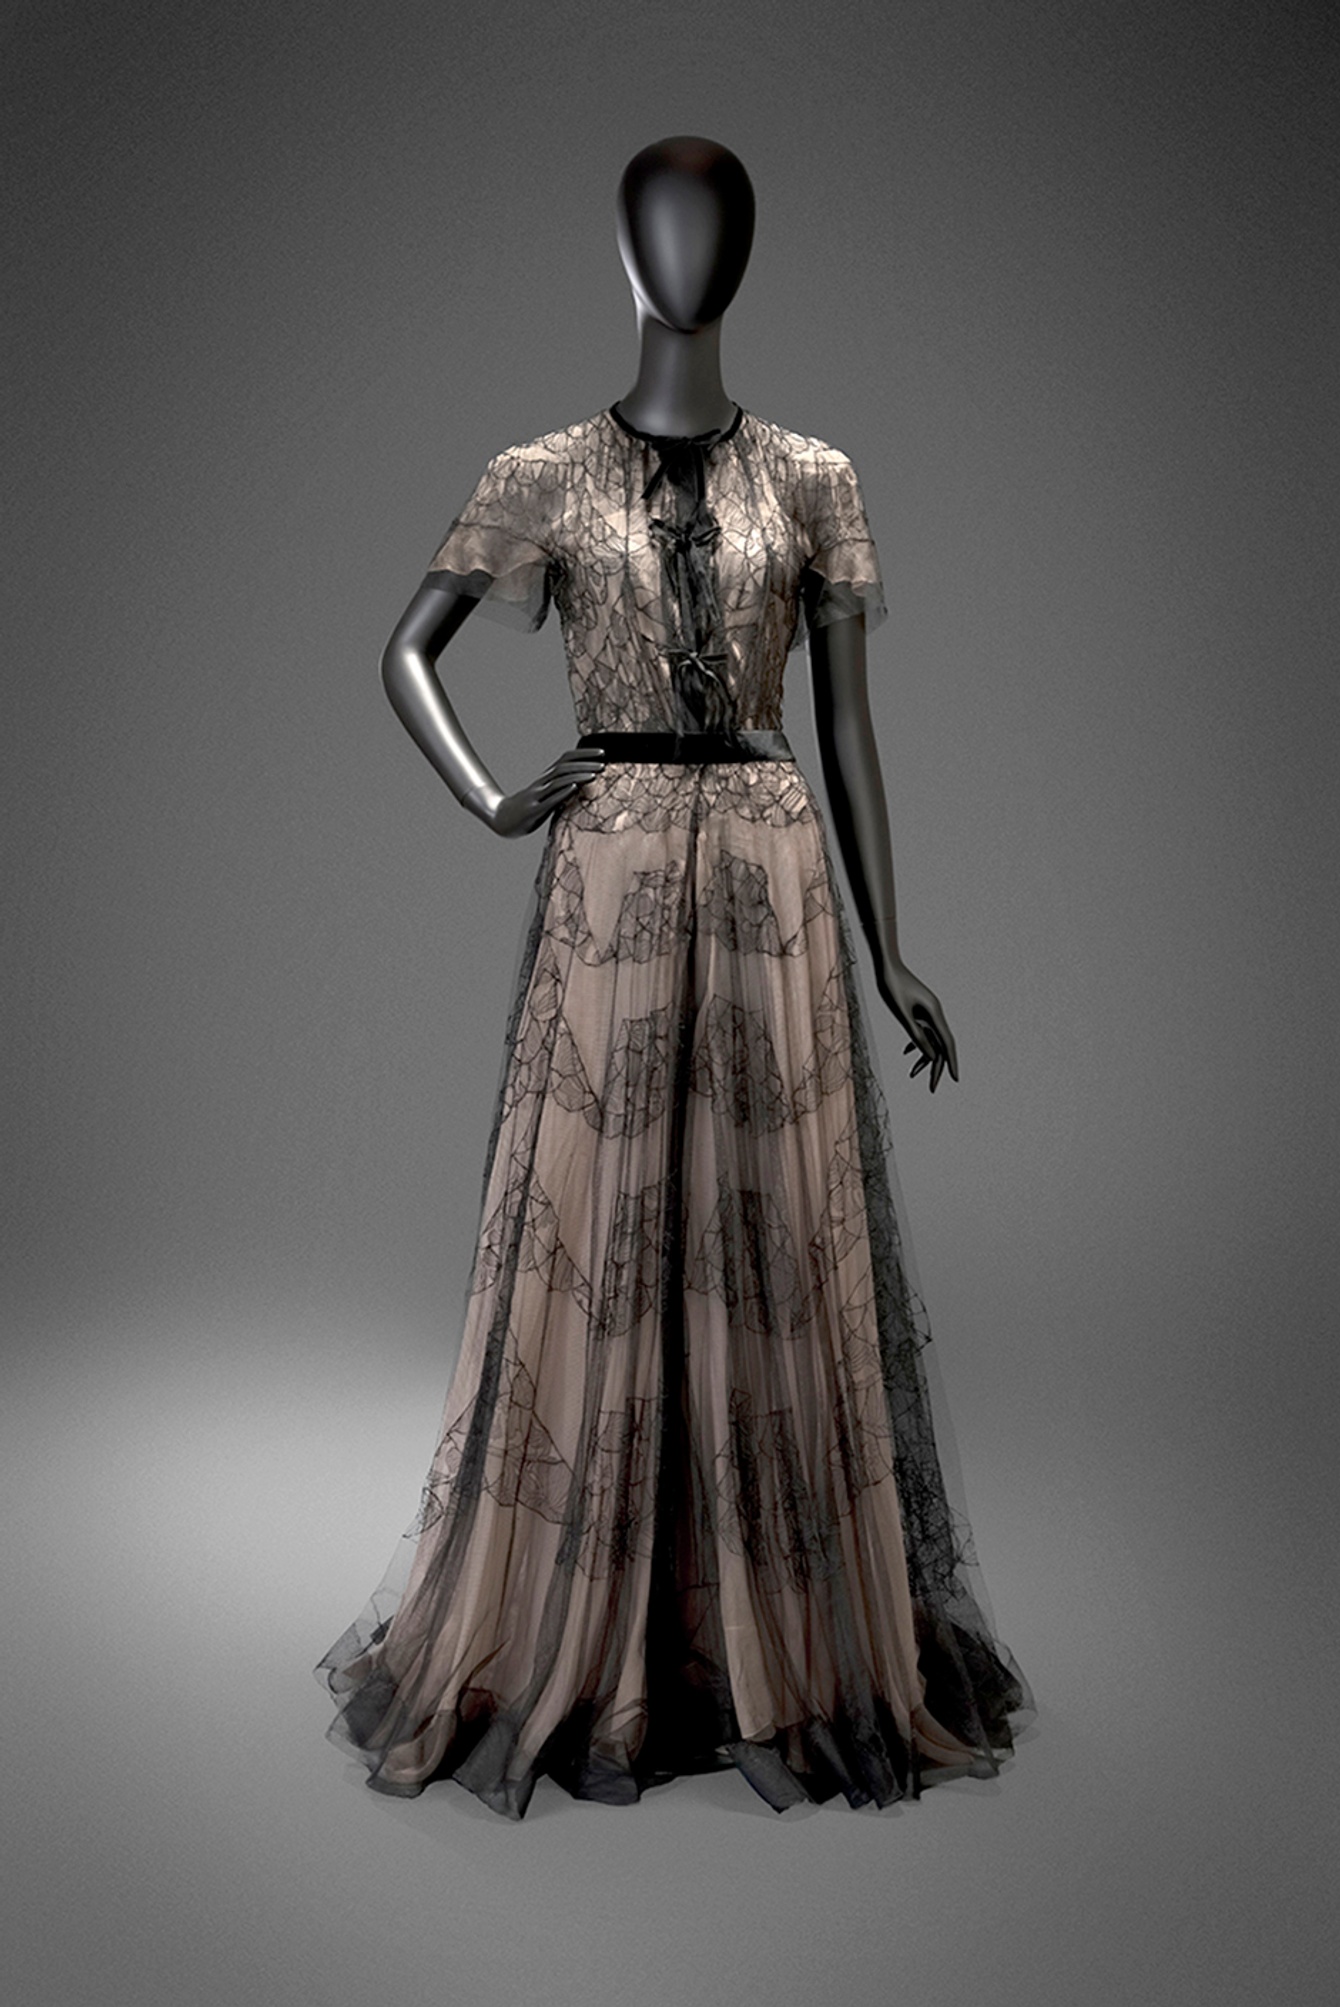 erfgoed conservatief Opera Glamour 30's Fashion expo: mode in de jaren 1930 | BRUZZ